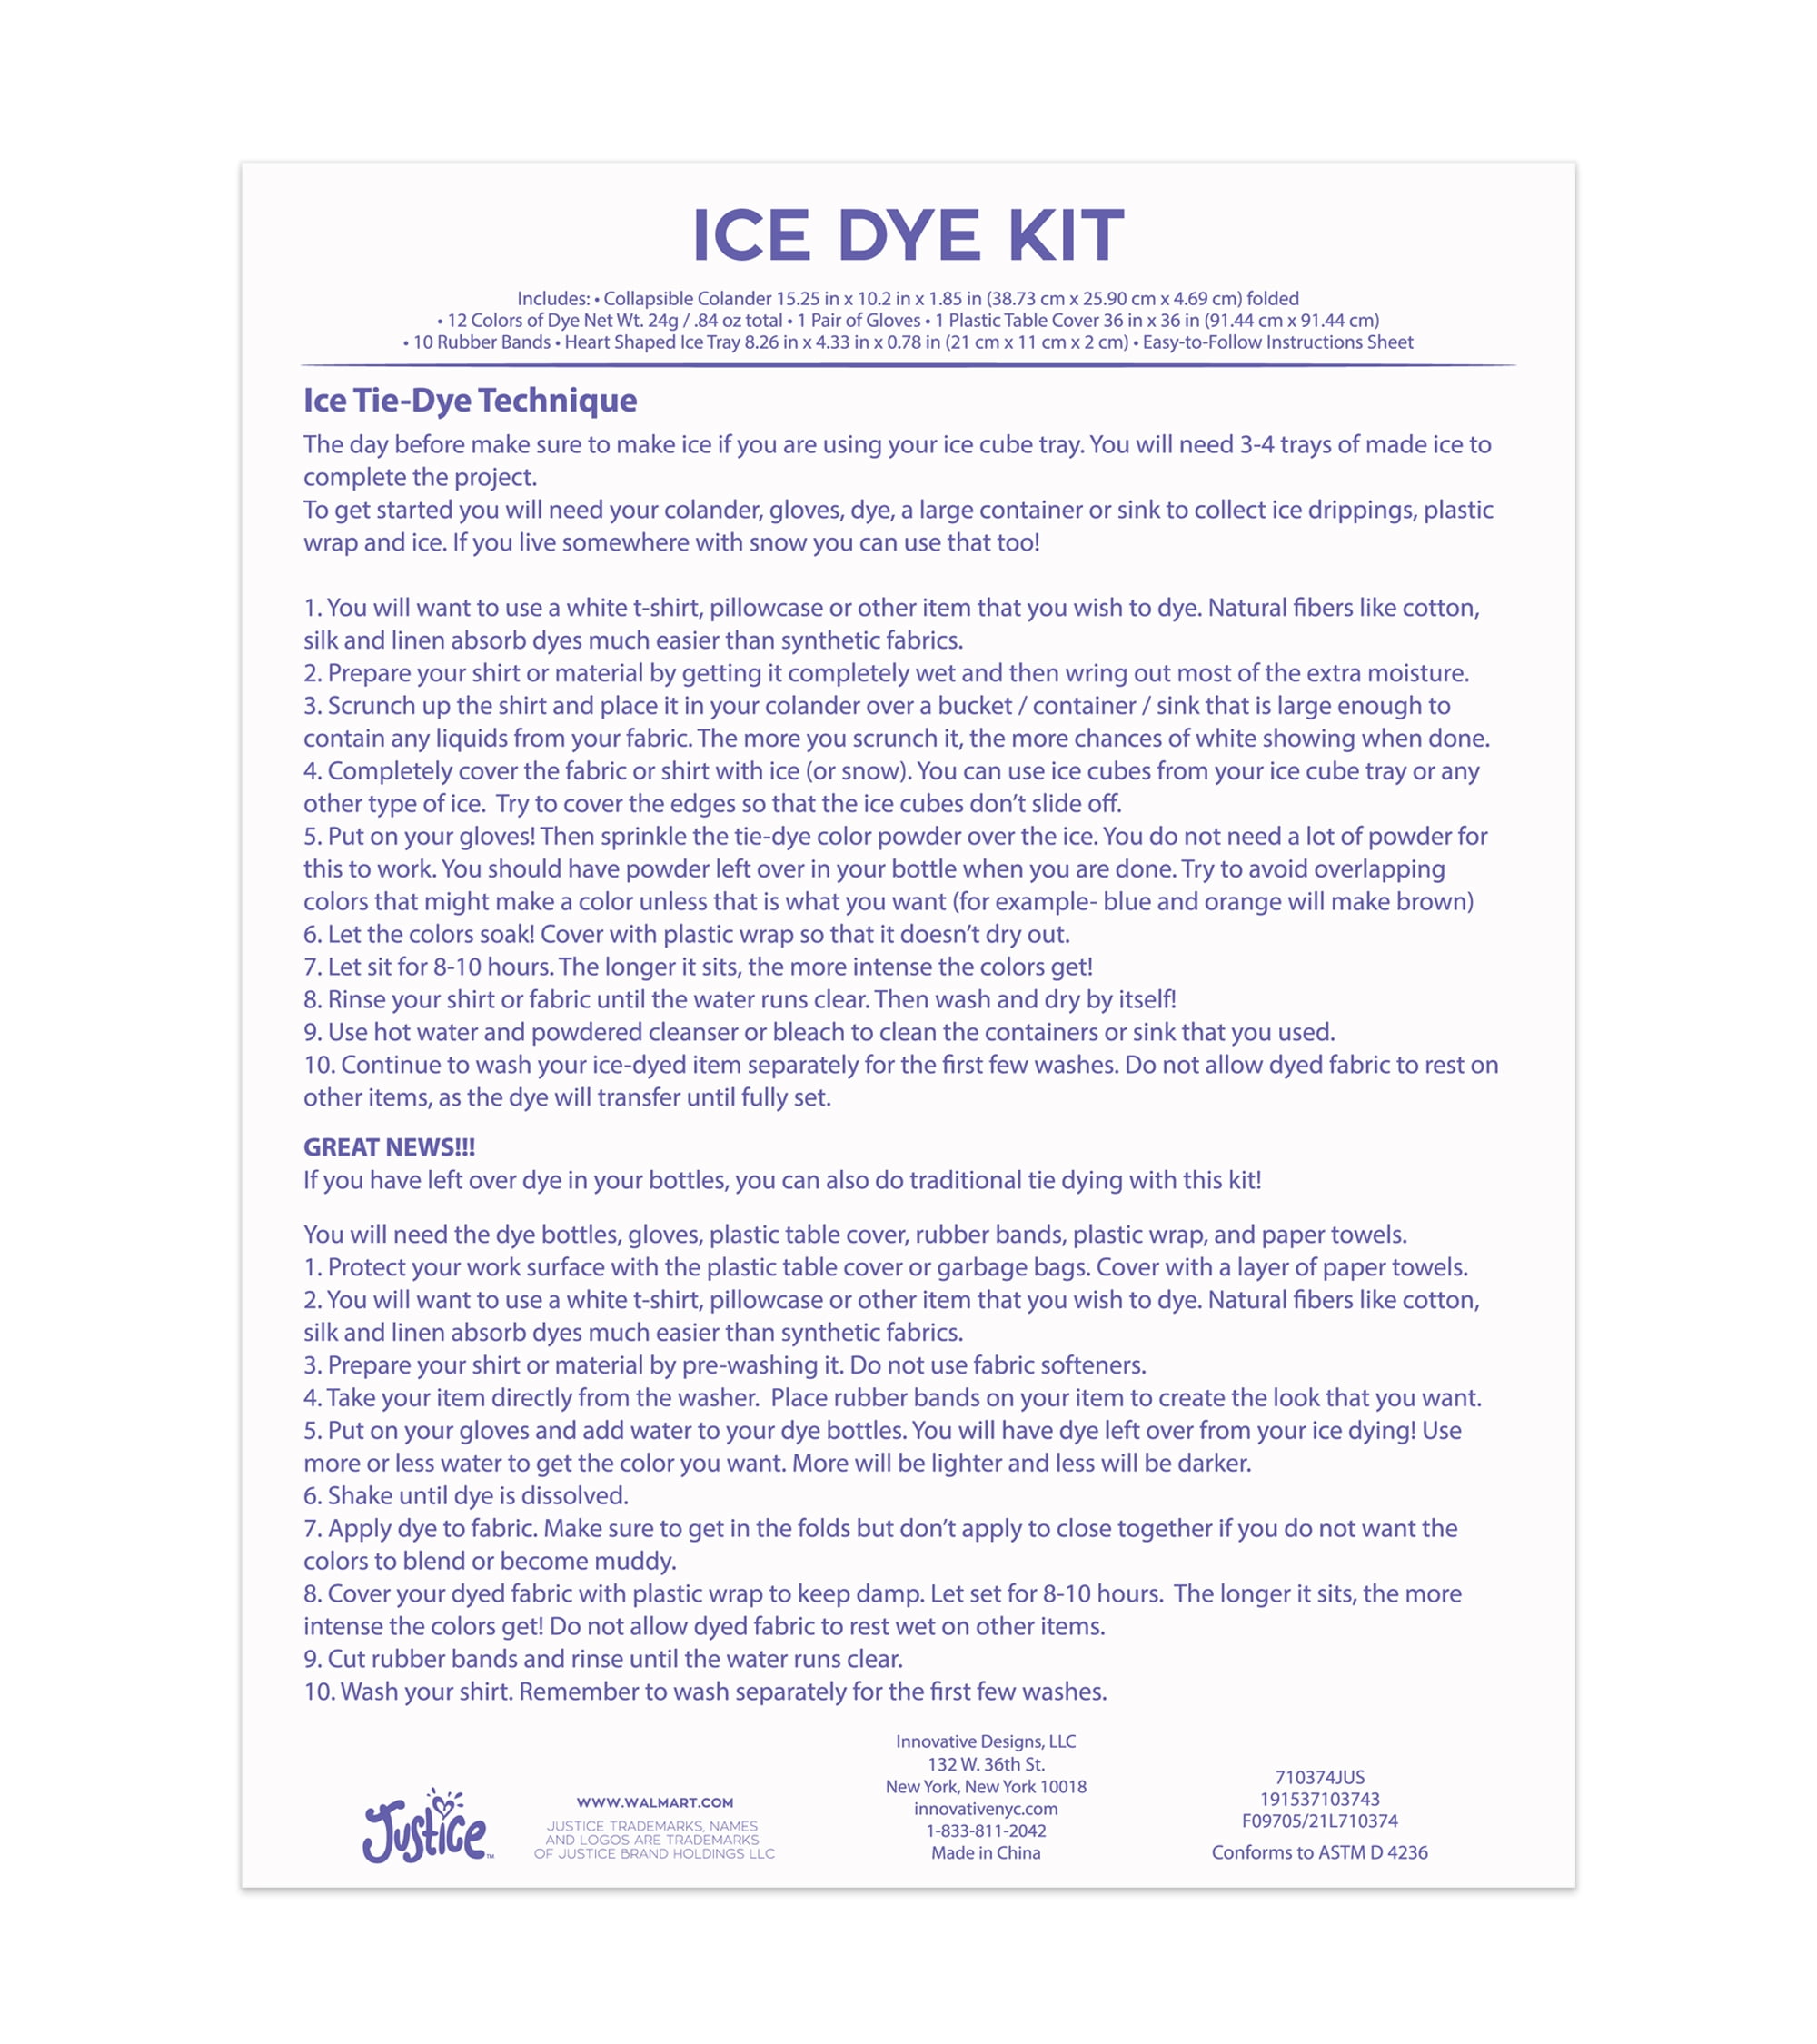 Justice DIY Tie-Dye Ice Dye Kit